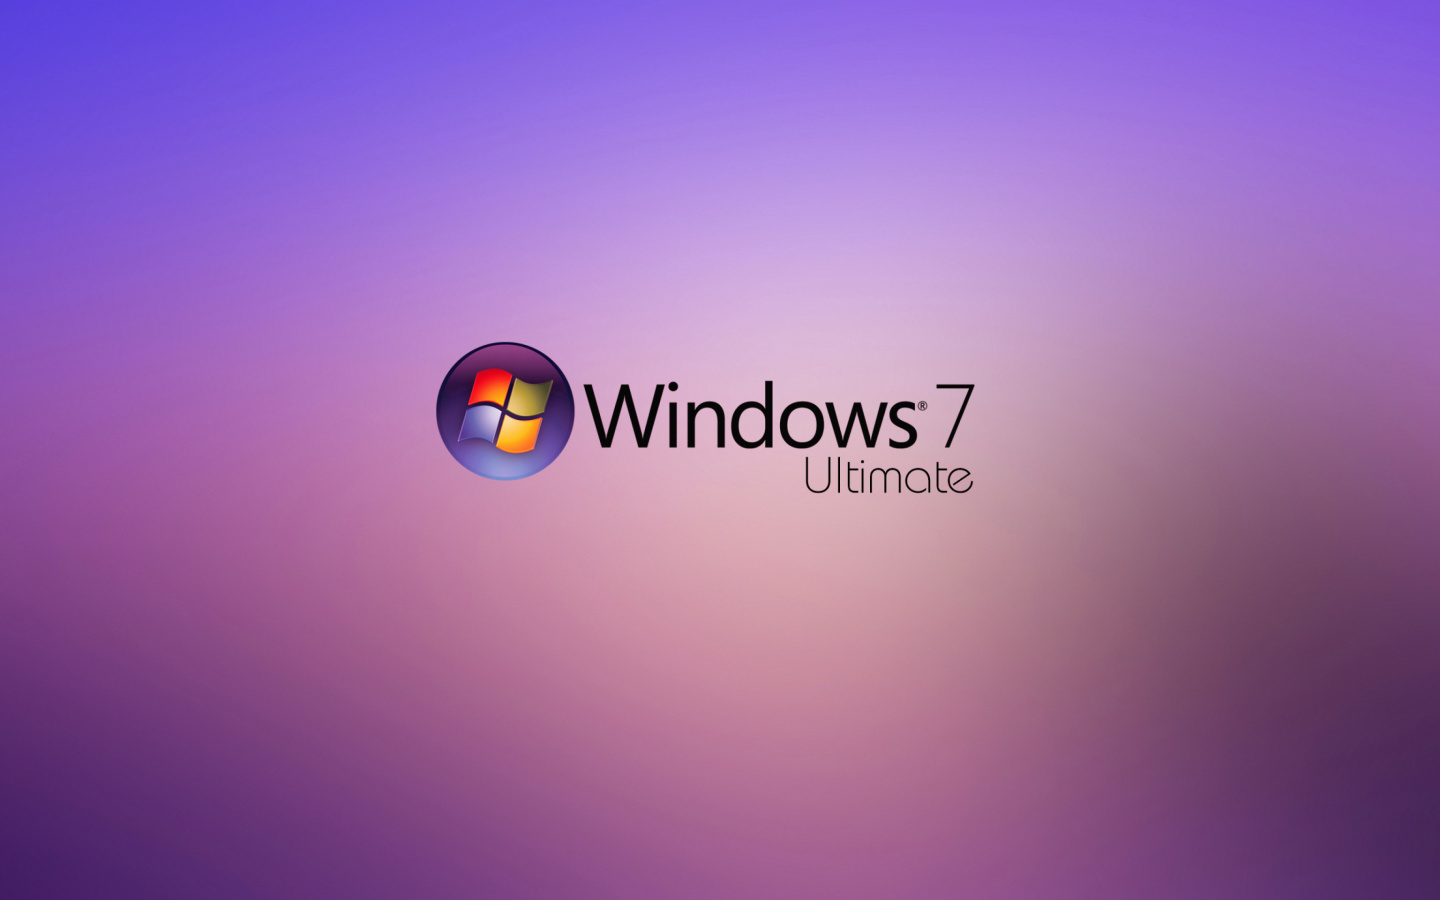 Das Windows 7 Ultimate Wallpaper 1440x900